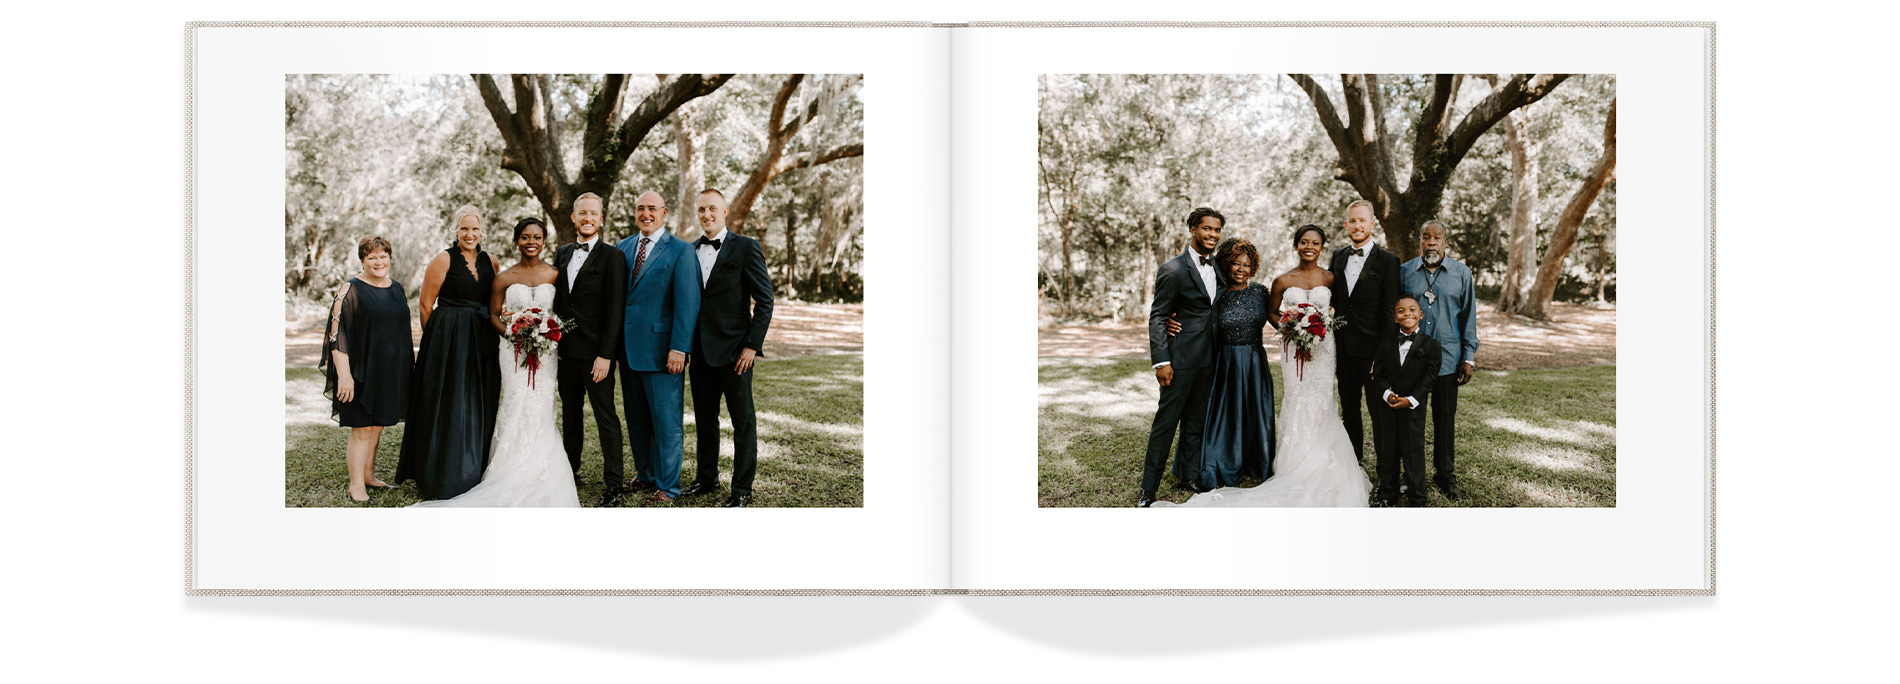 Formal family group photos at wedding